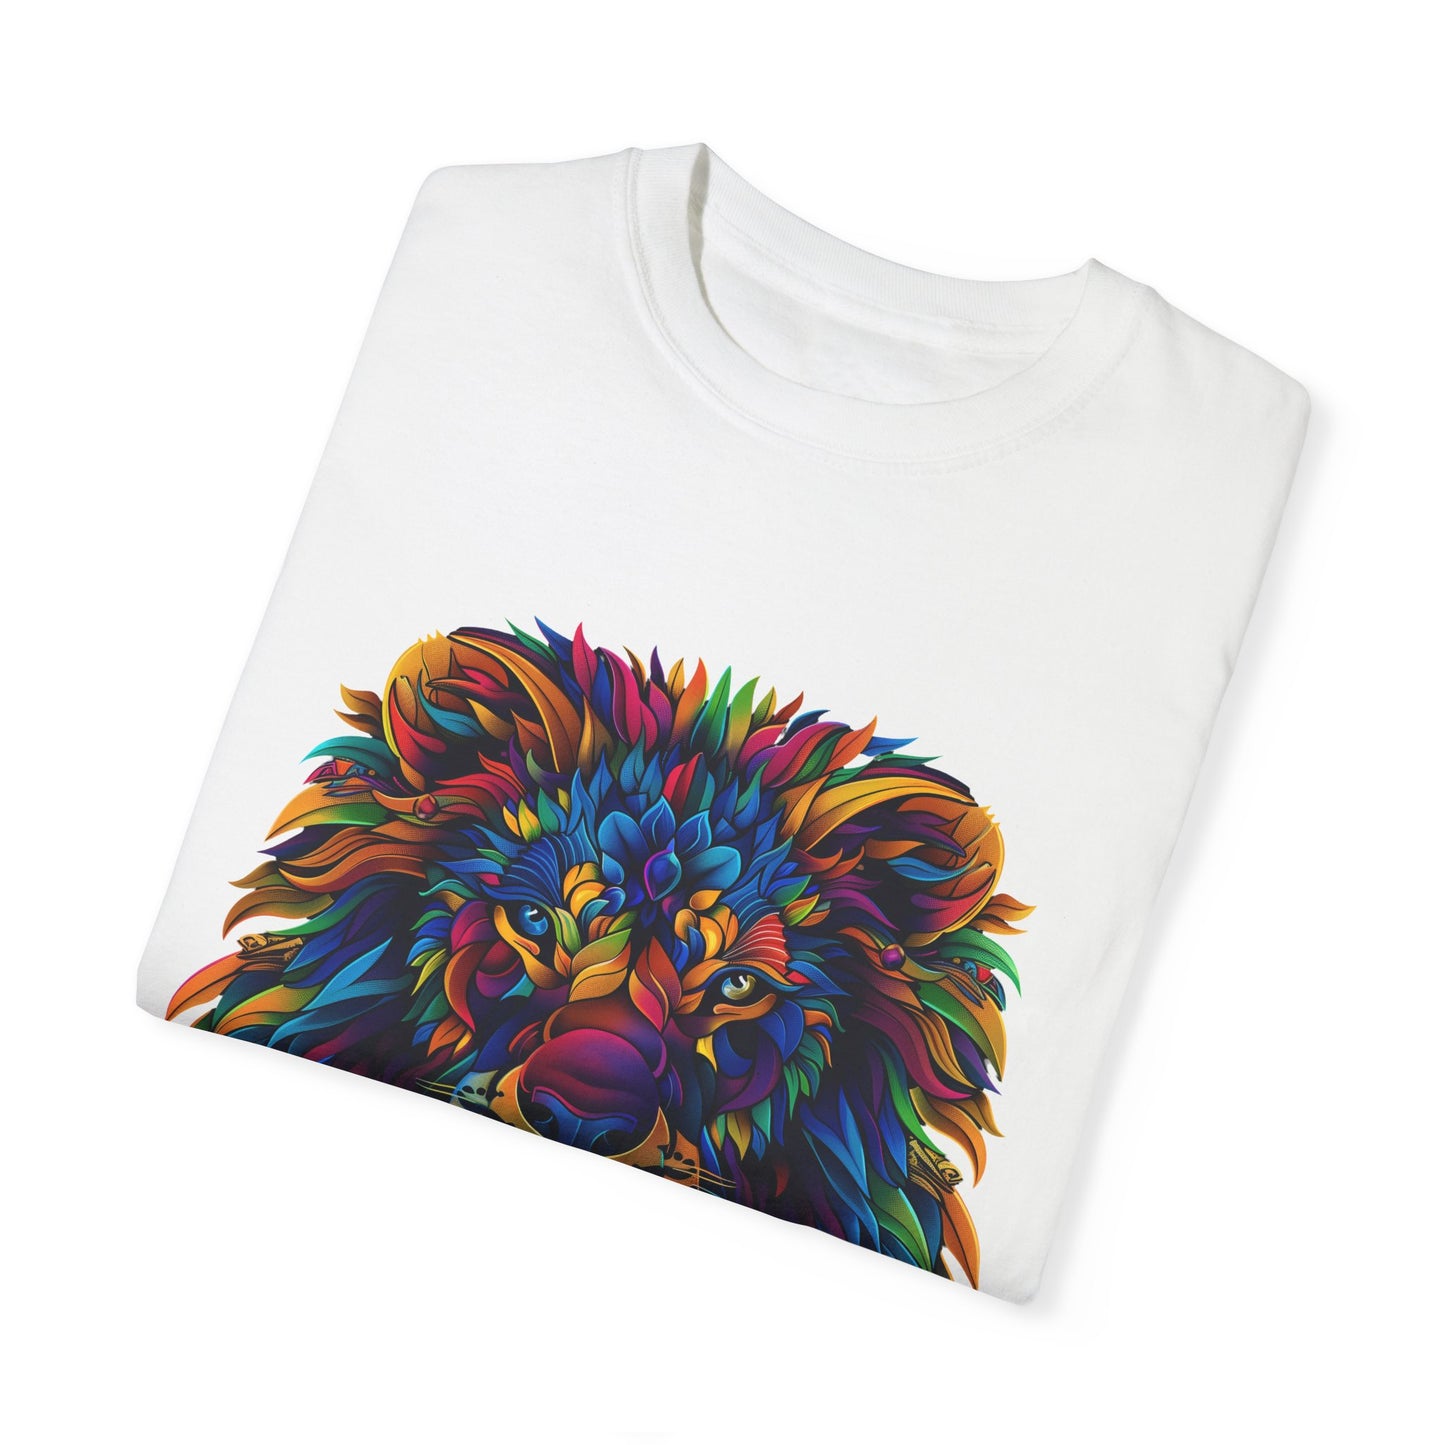 Lion Head Cool Graphic Design Novelty Unisex Garment-dyed T-shirt Cotton Funny Humorous Graphic Soft Premium Unisex Men Women White T-shirt Birthday Gift-23